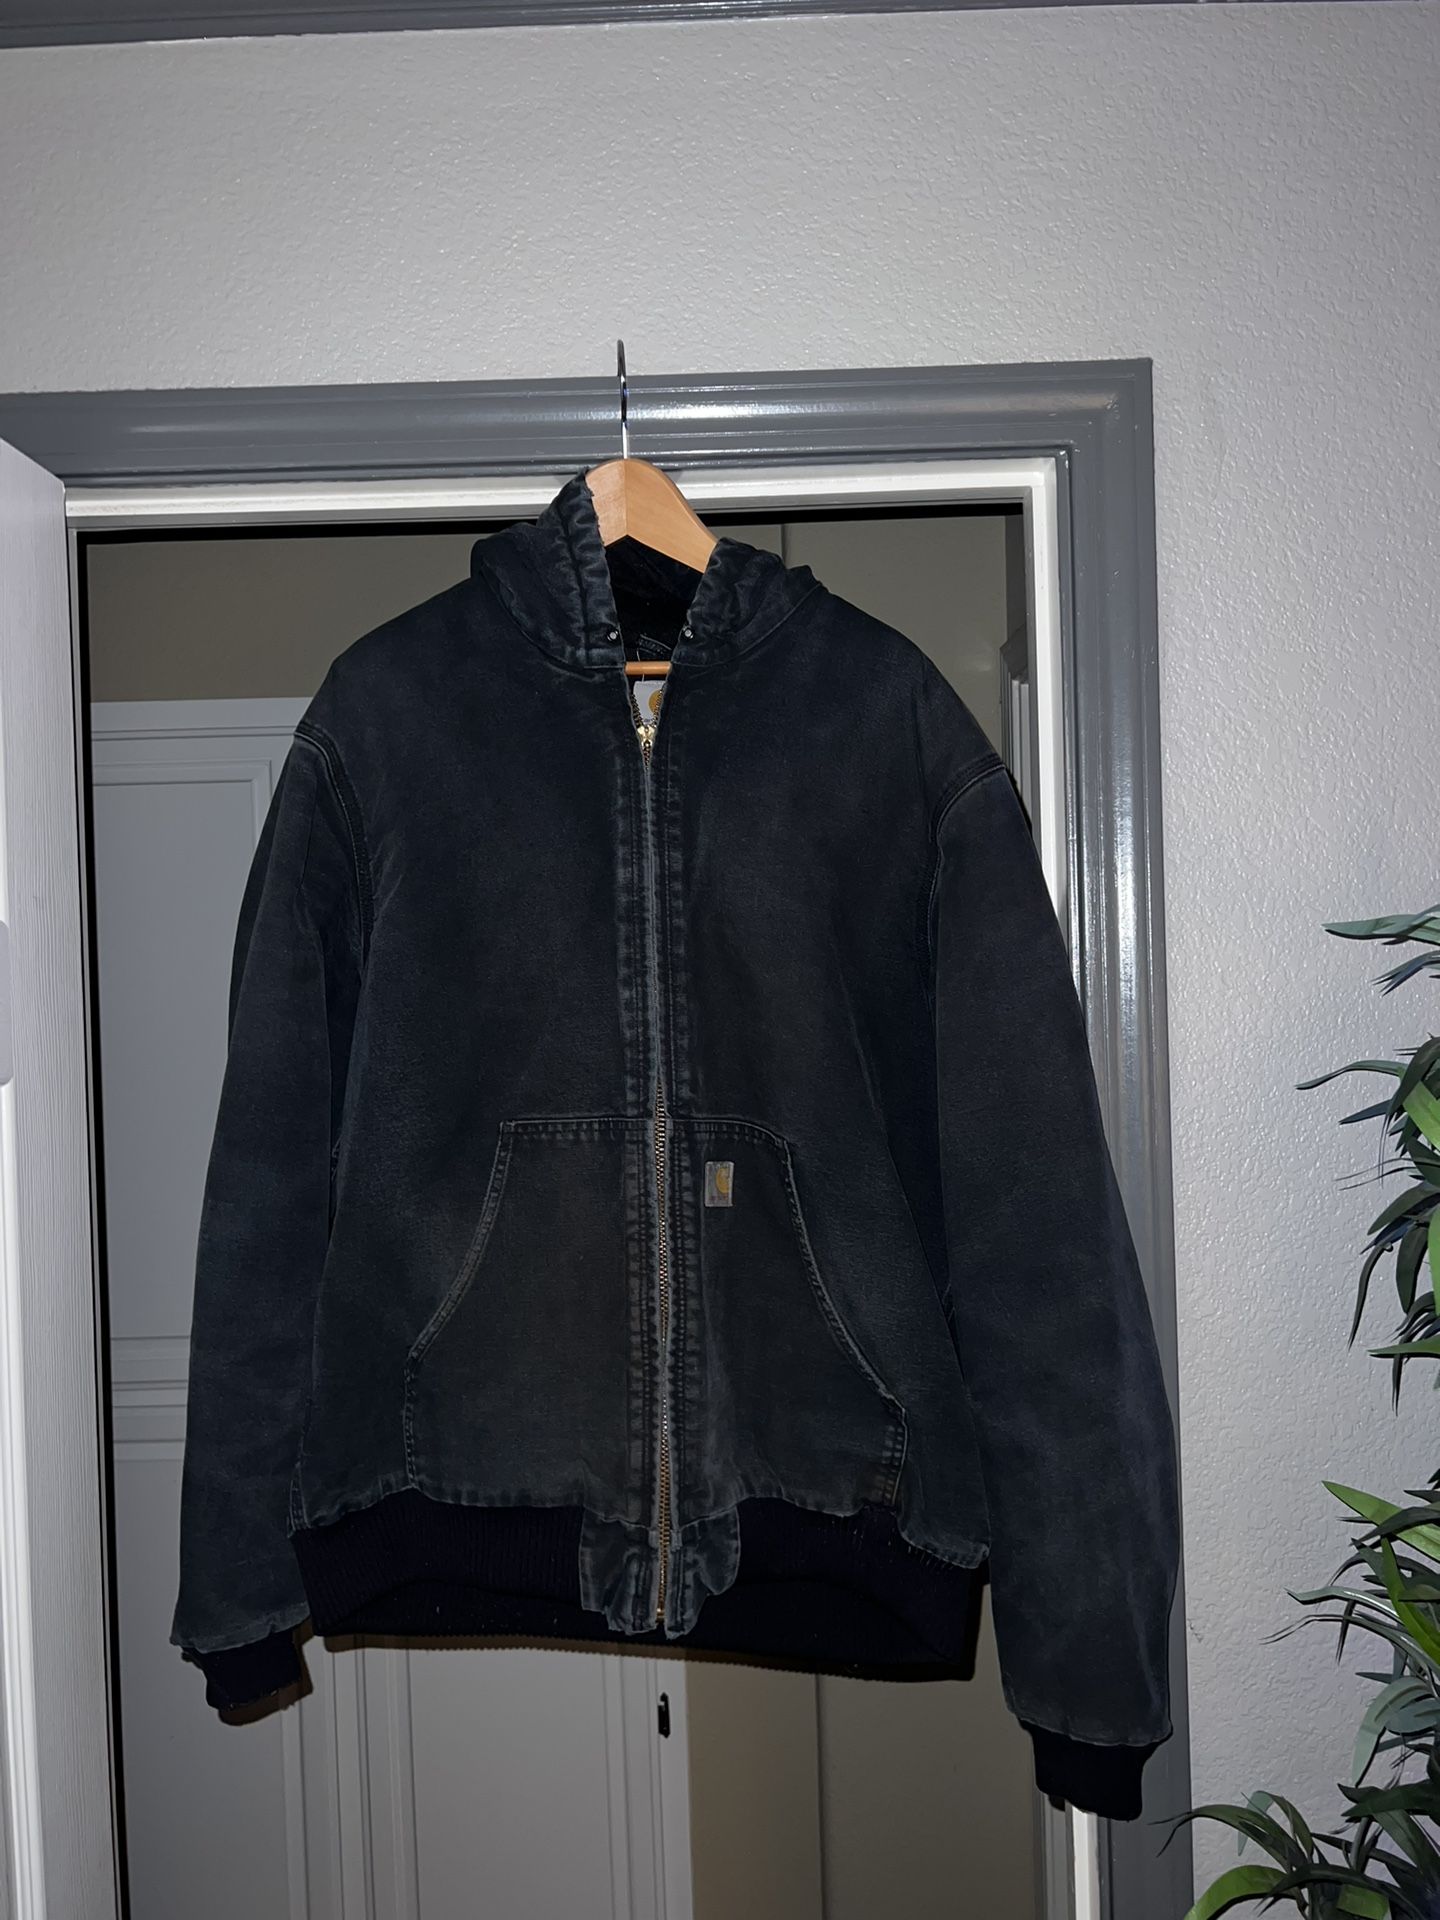 Vintage Carhart Jacket 